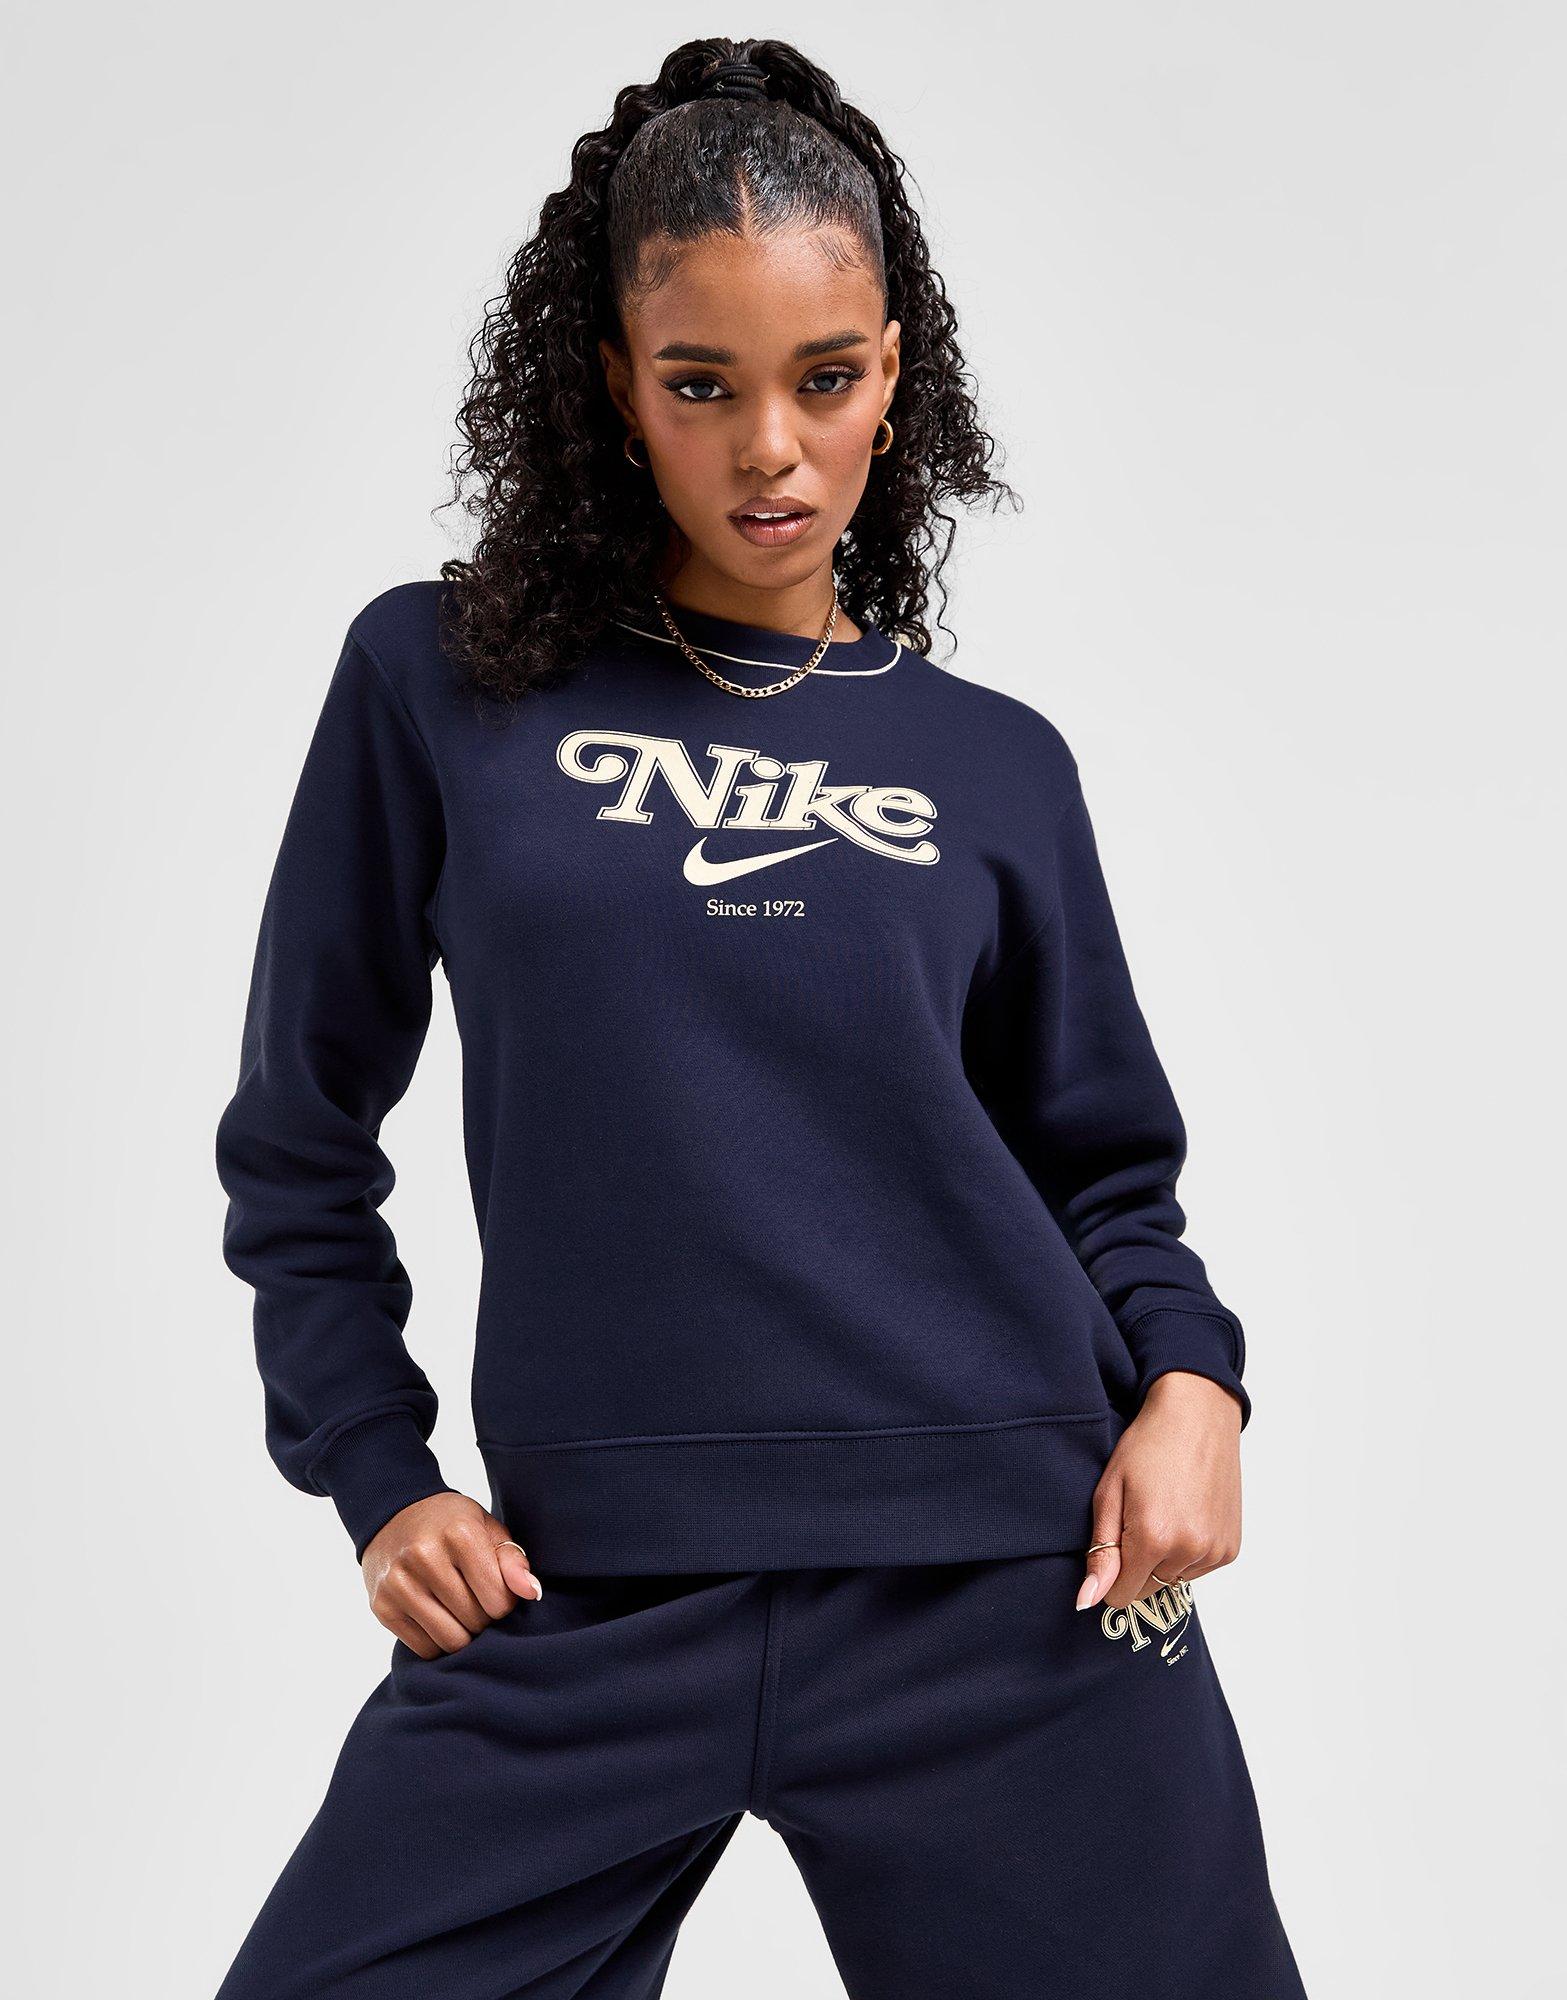 Survêtement femme Nike Sportswear Essential - Nike - Top Marques Sport -  Sport